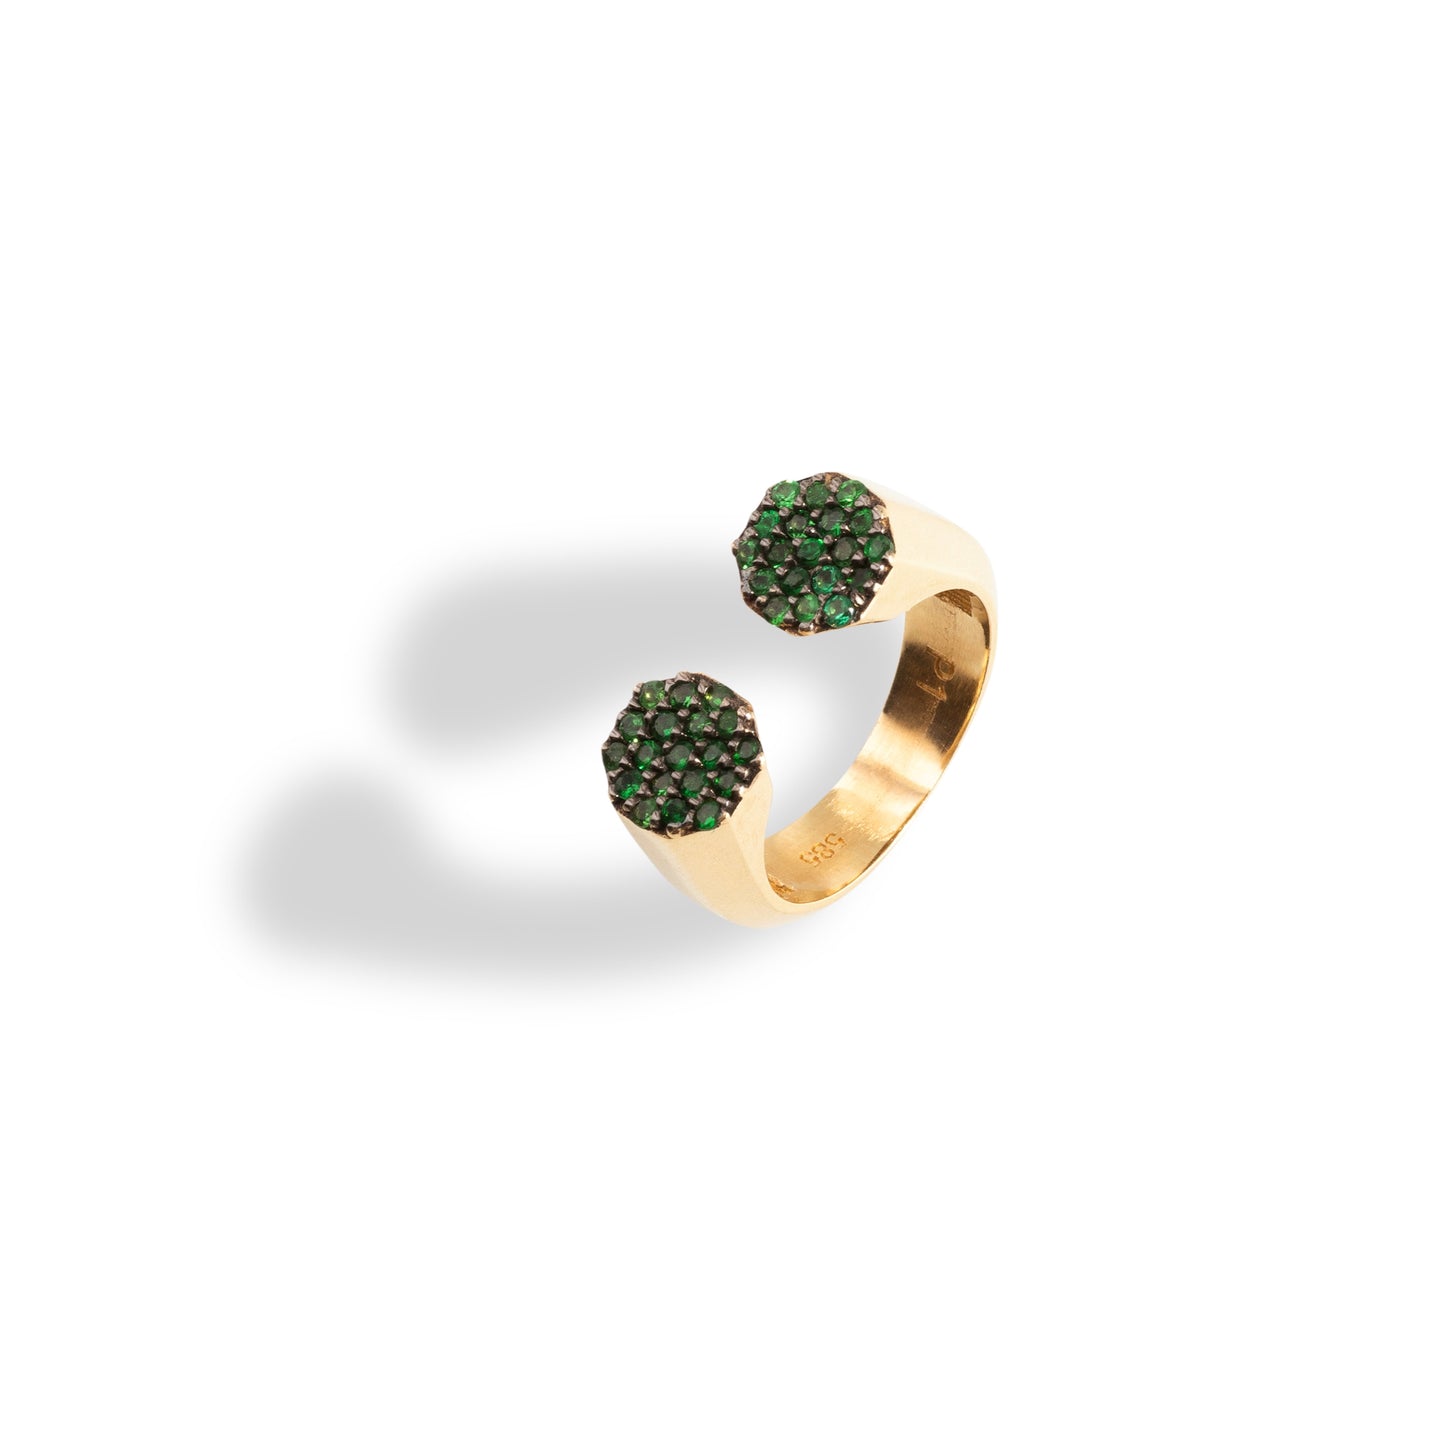 Double Headed Seljuks Green Garnets Ring